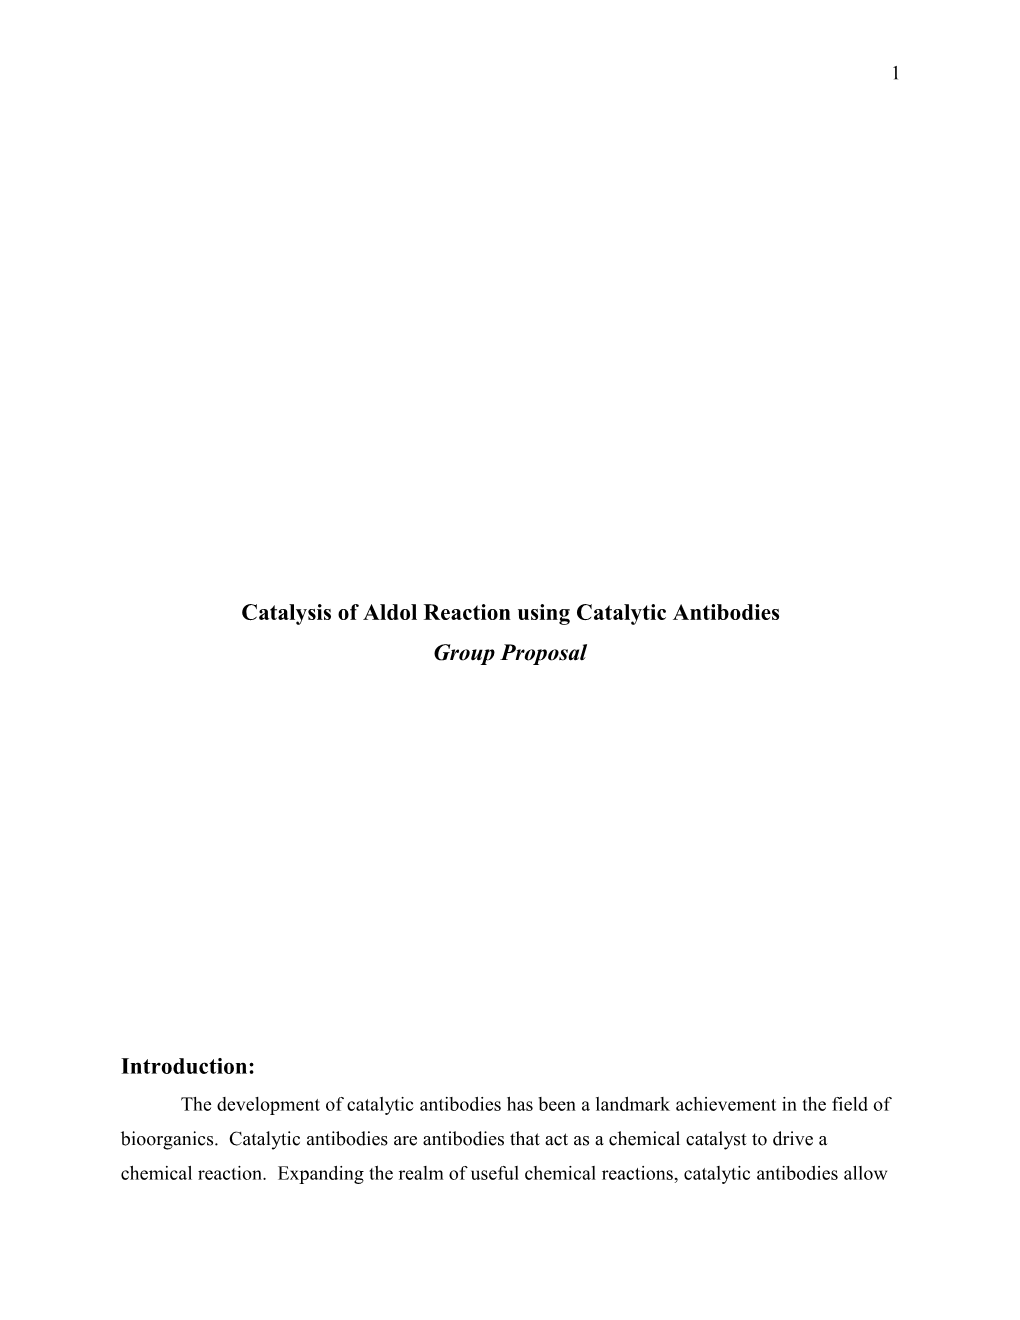 Catalysis of Aldol Reaction Using Catalytic Antibodies